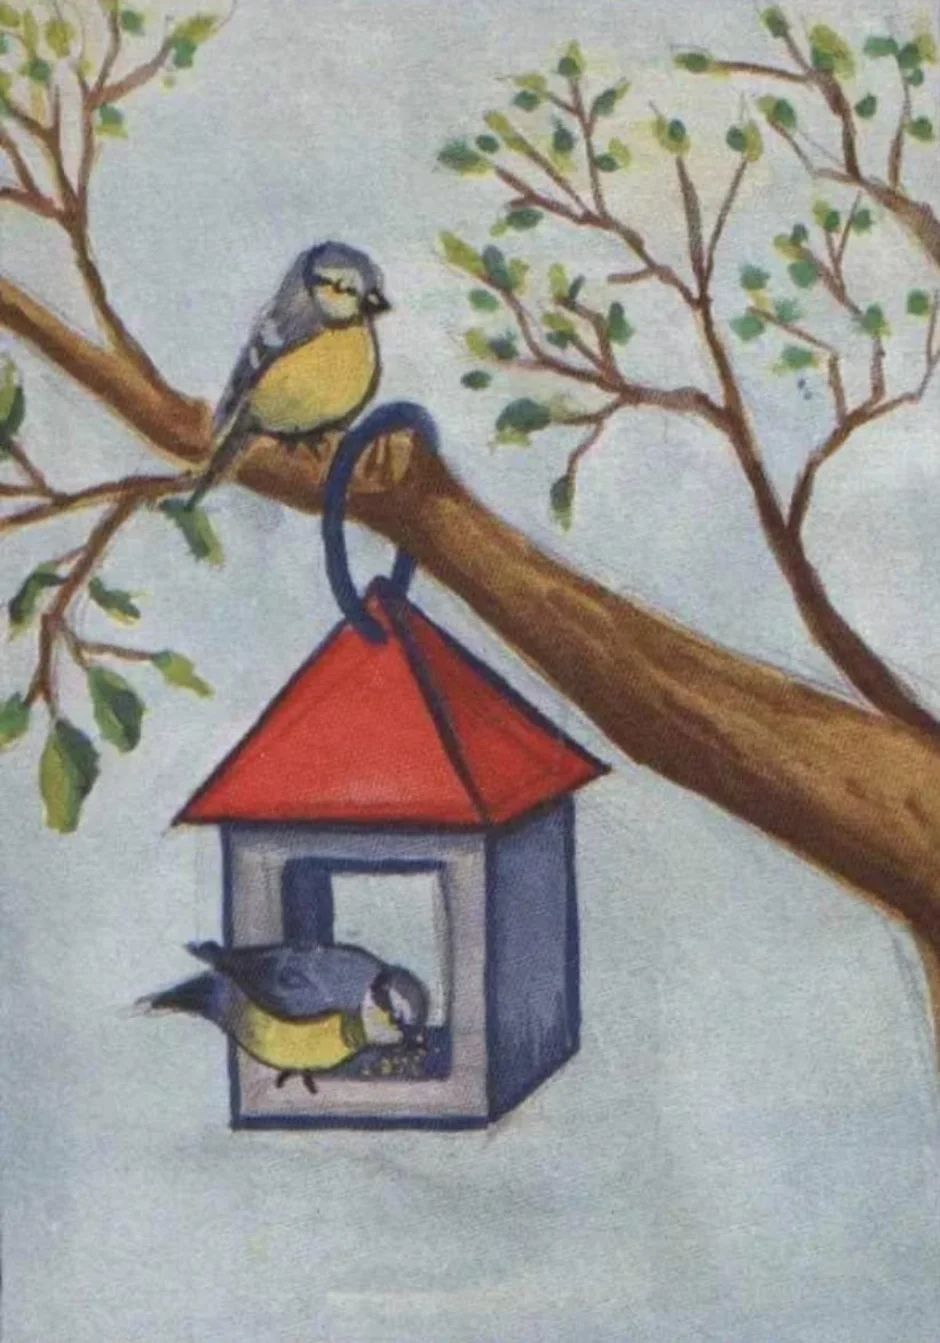 Рисунок к дню птиц. Рисование птицы на кормушке. Рисунок ко Дню птиц. Кормушка для птиц рисунок. Кормушка для птиц рисунок для детей.